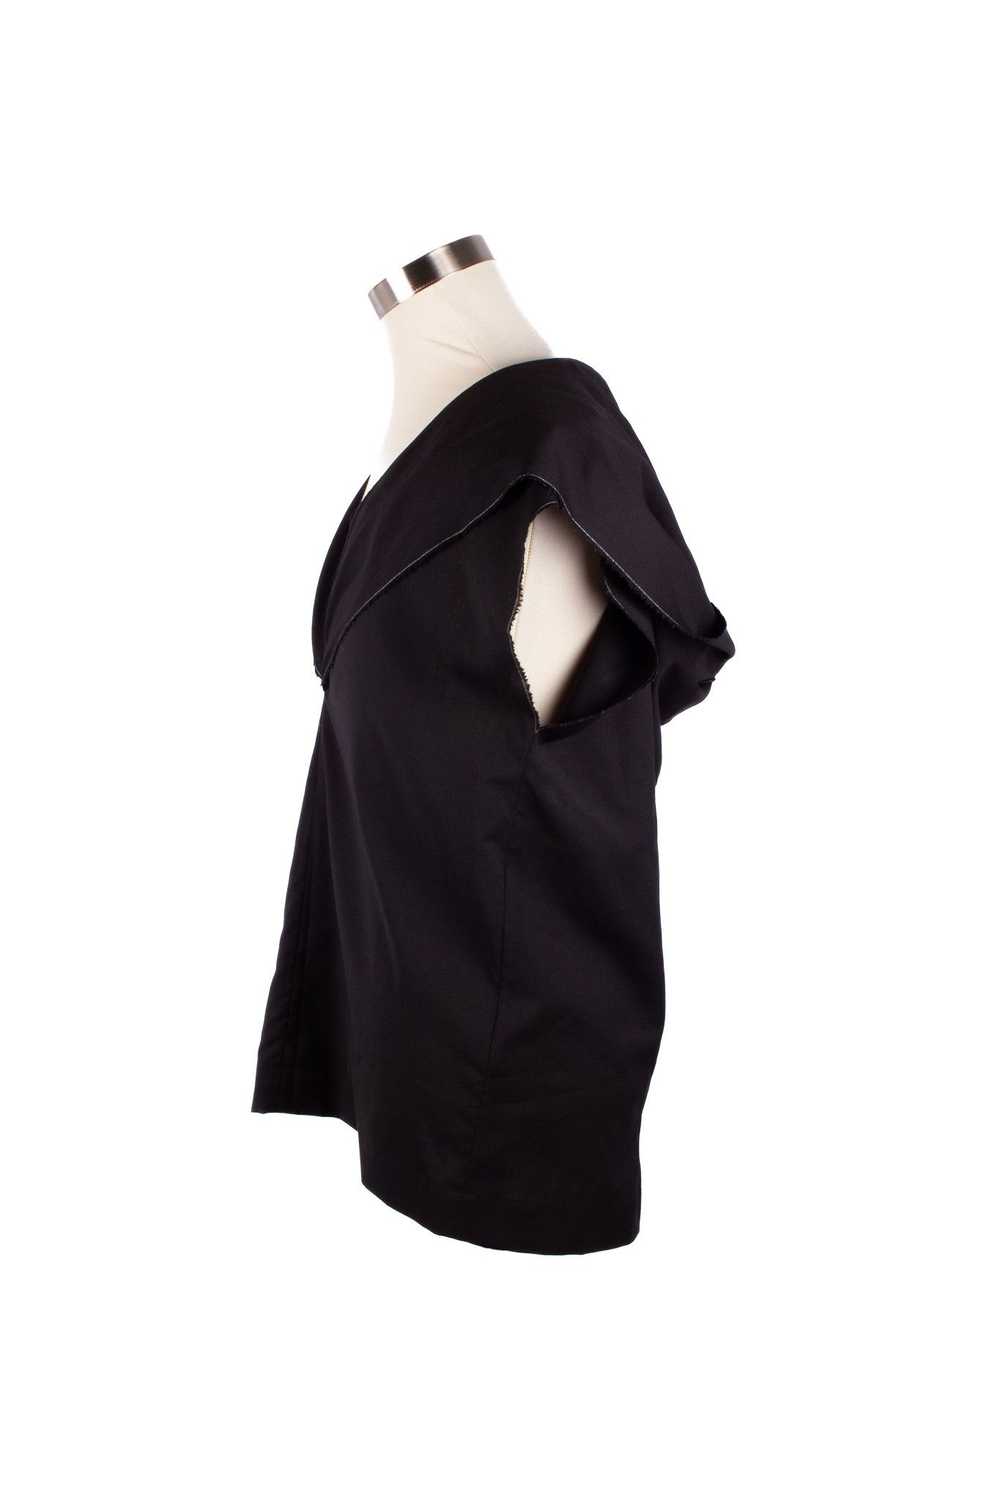 Dior DIOR HOMME BLACK WOOL DOUBLE HOODED CAP SLEE… - image 3